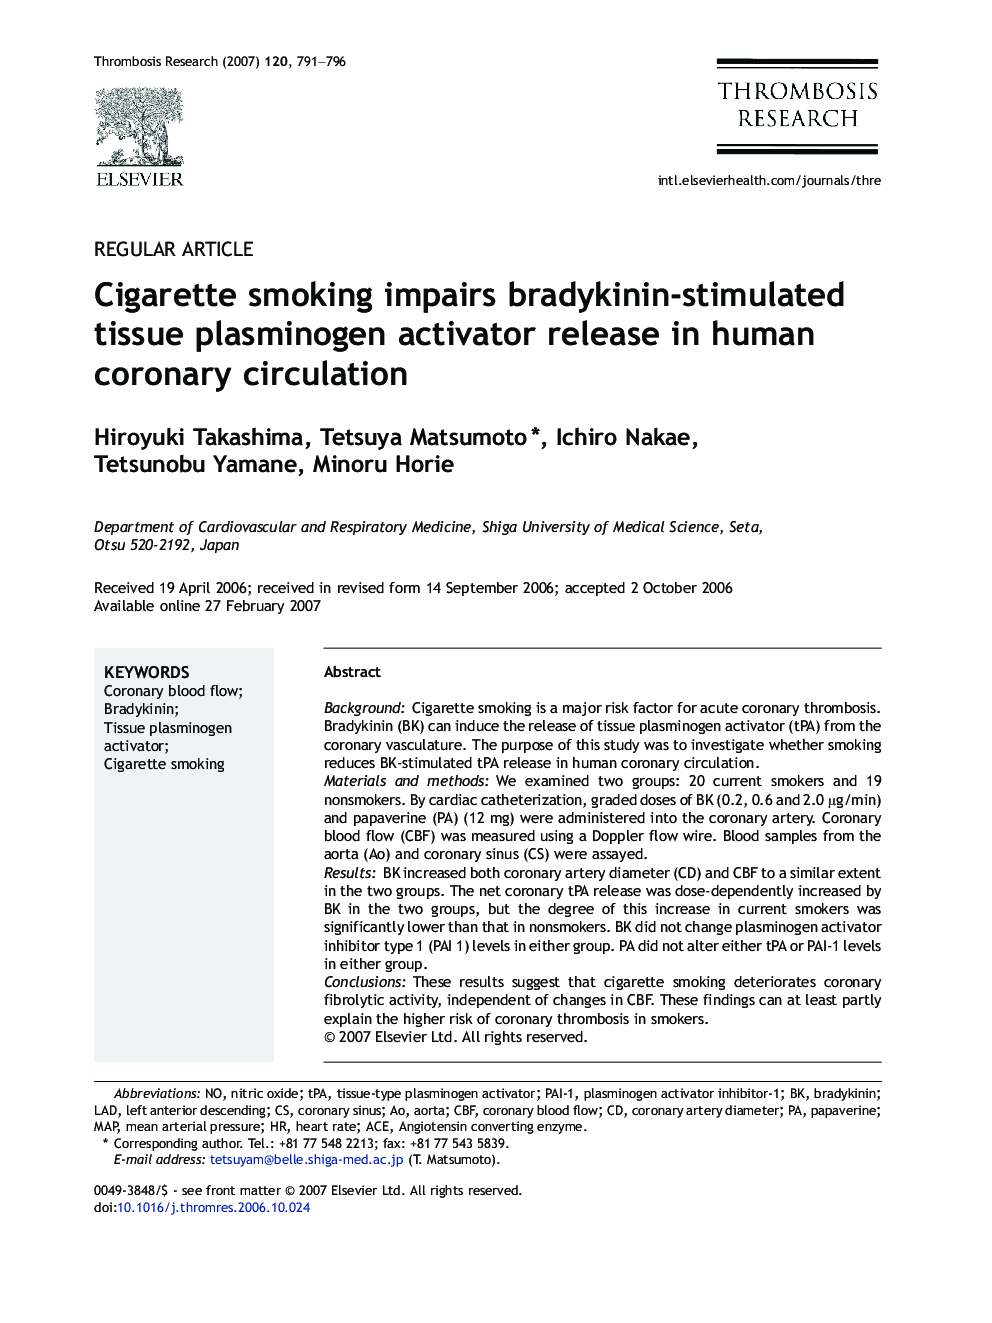 Cigarette smoking impairs bradykinin-stimulated tissue plasminogen activator release in human coronary circulation